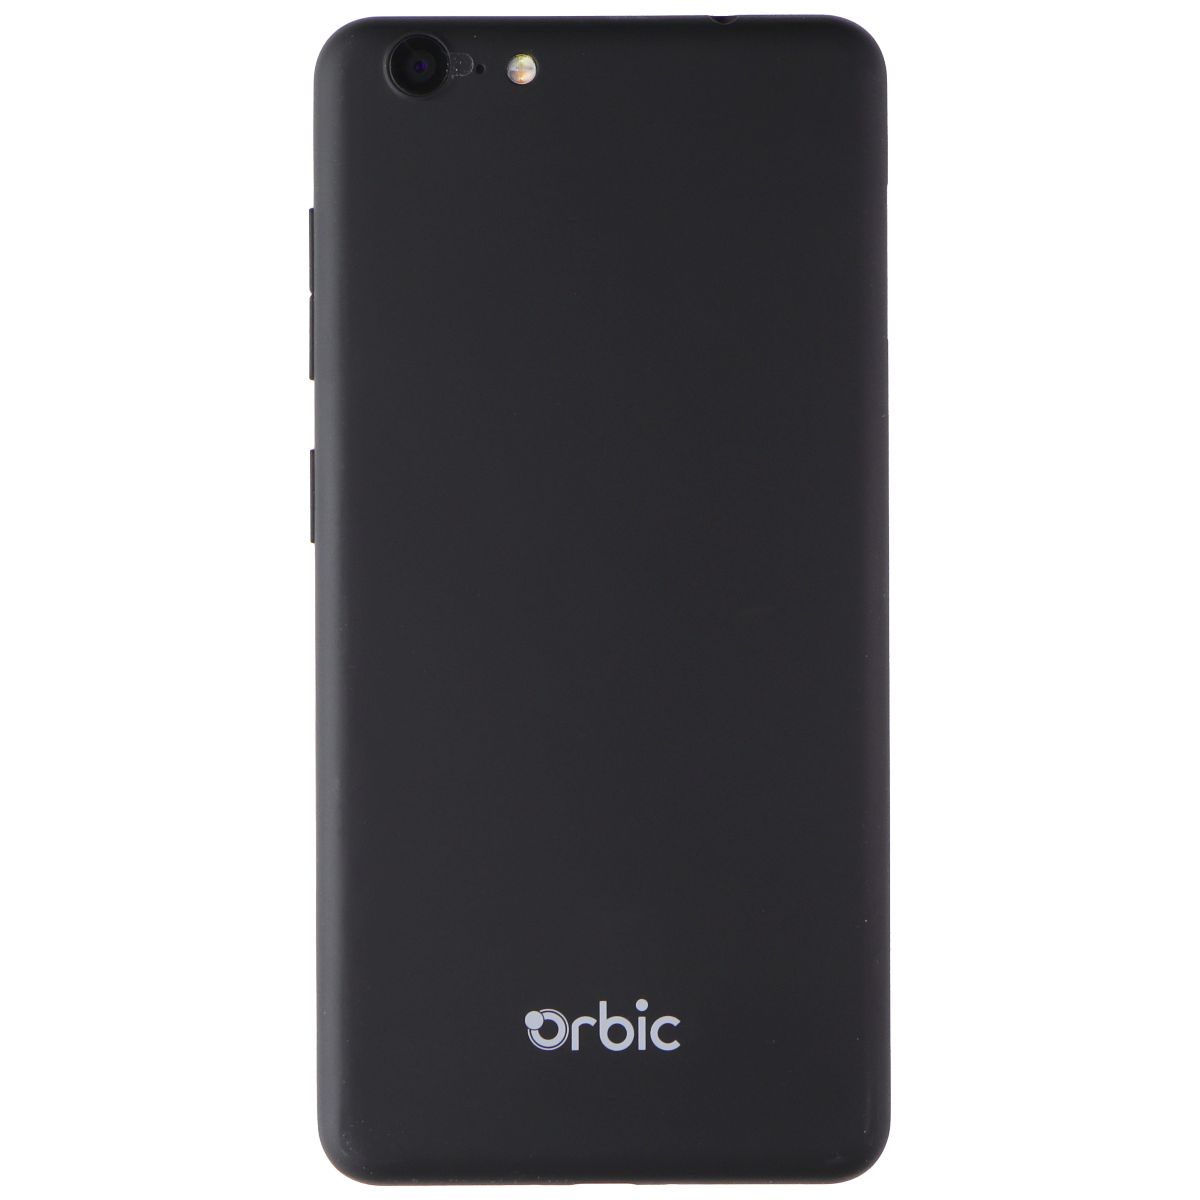 Orbic Wonder (5.5-inch) Smartphone (RC555L) Verizon Prepaid - 16GB/Black Cell Phones & Smartphones Orbic    - Simple Cell Bulk Wholesale Pricing - USA Seller